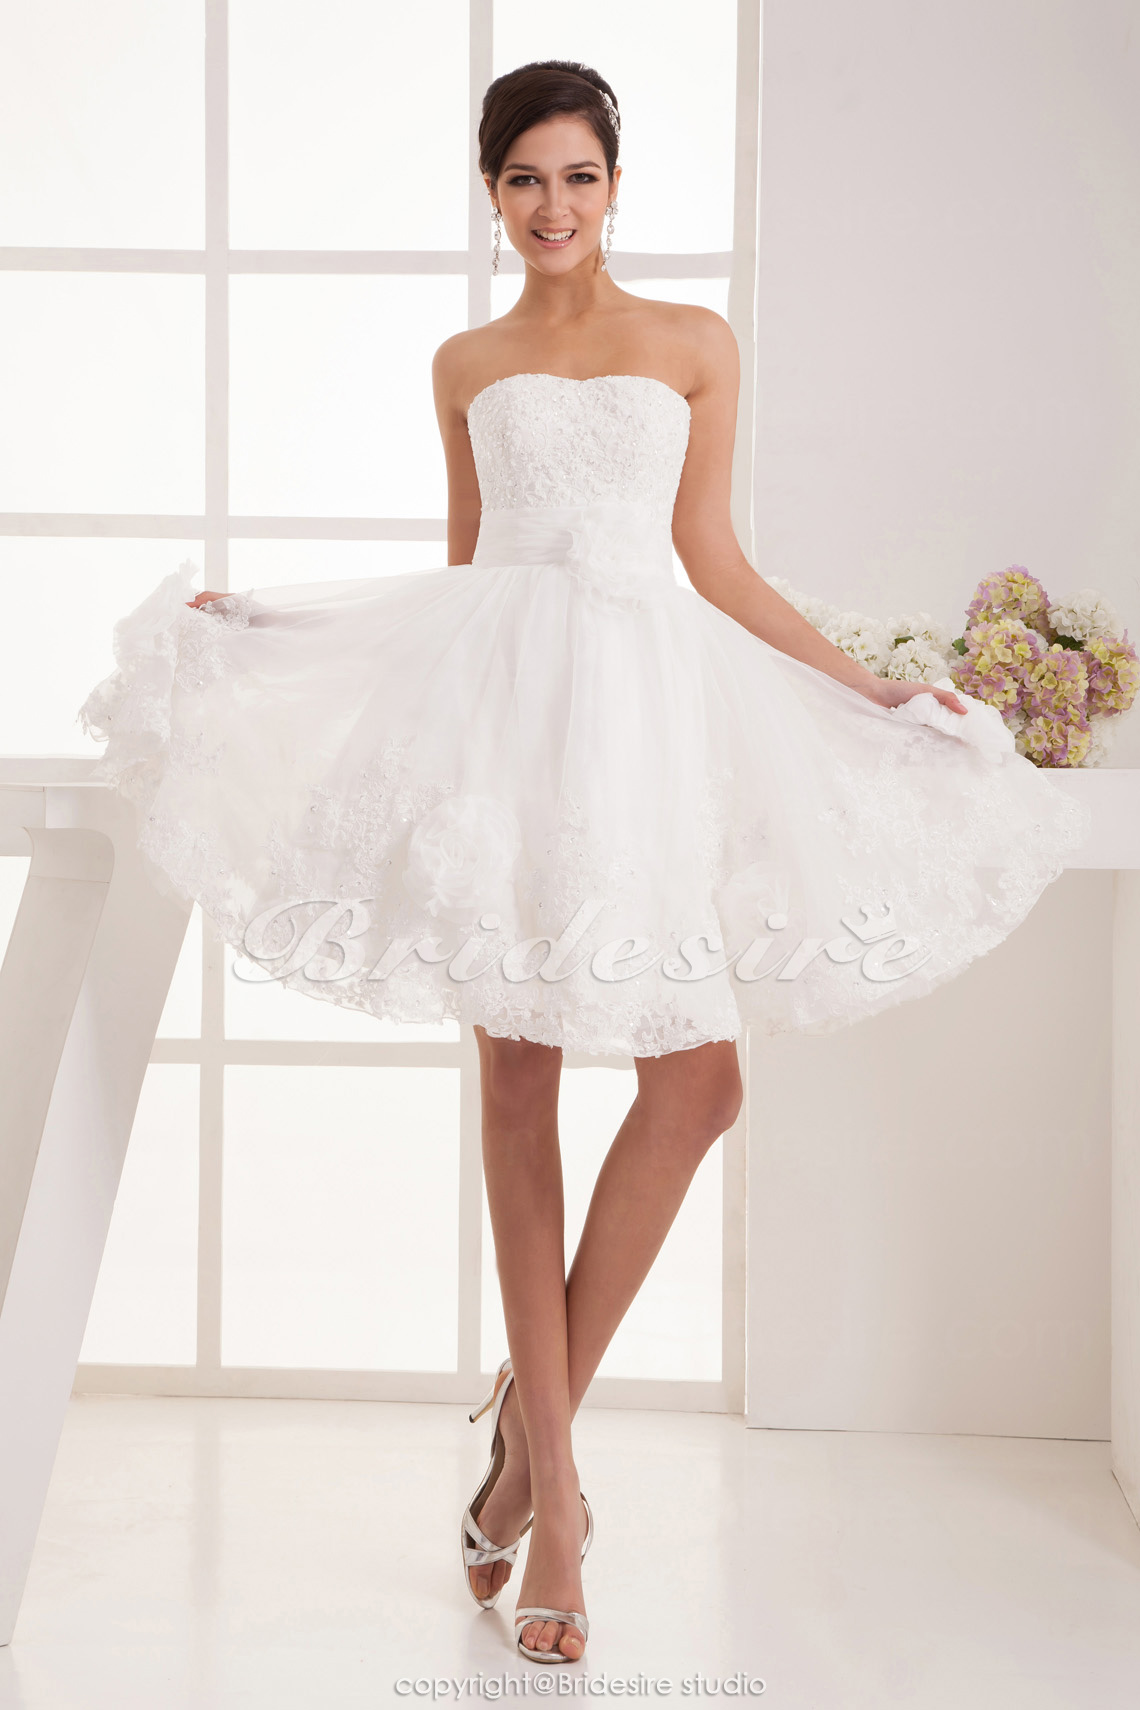 Princess Strapless Knee-length Sleeveless Lace Wedding Dress